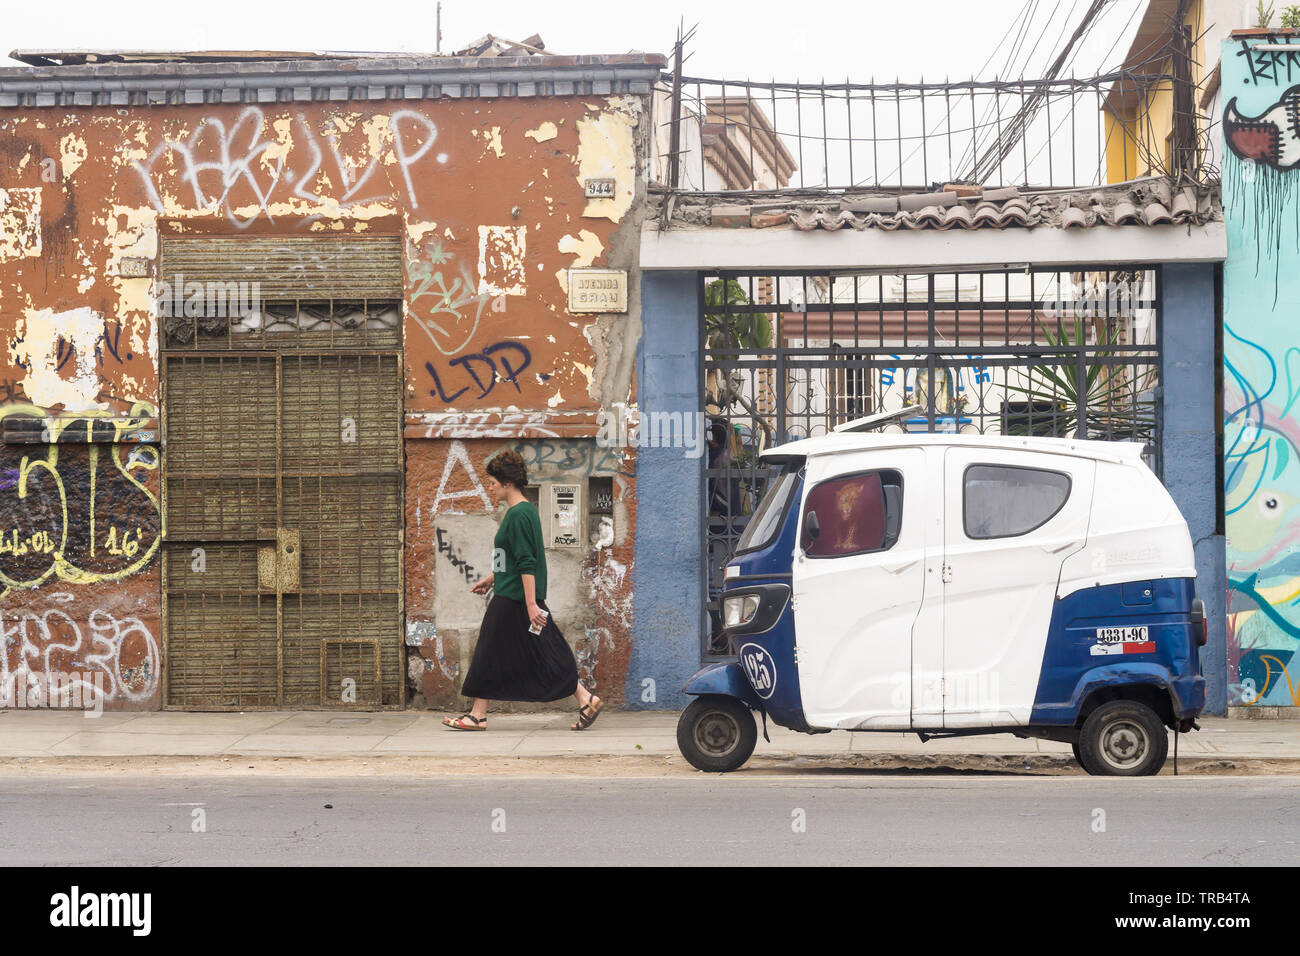 Barranco, Lima, street scene - woman walking past the mototaxi (Peruvian tuk tuk). Stock Photo